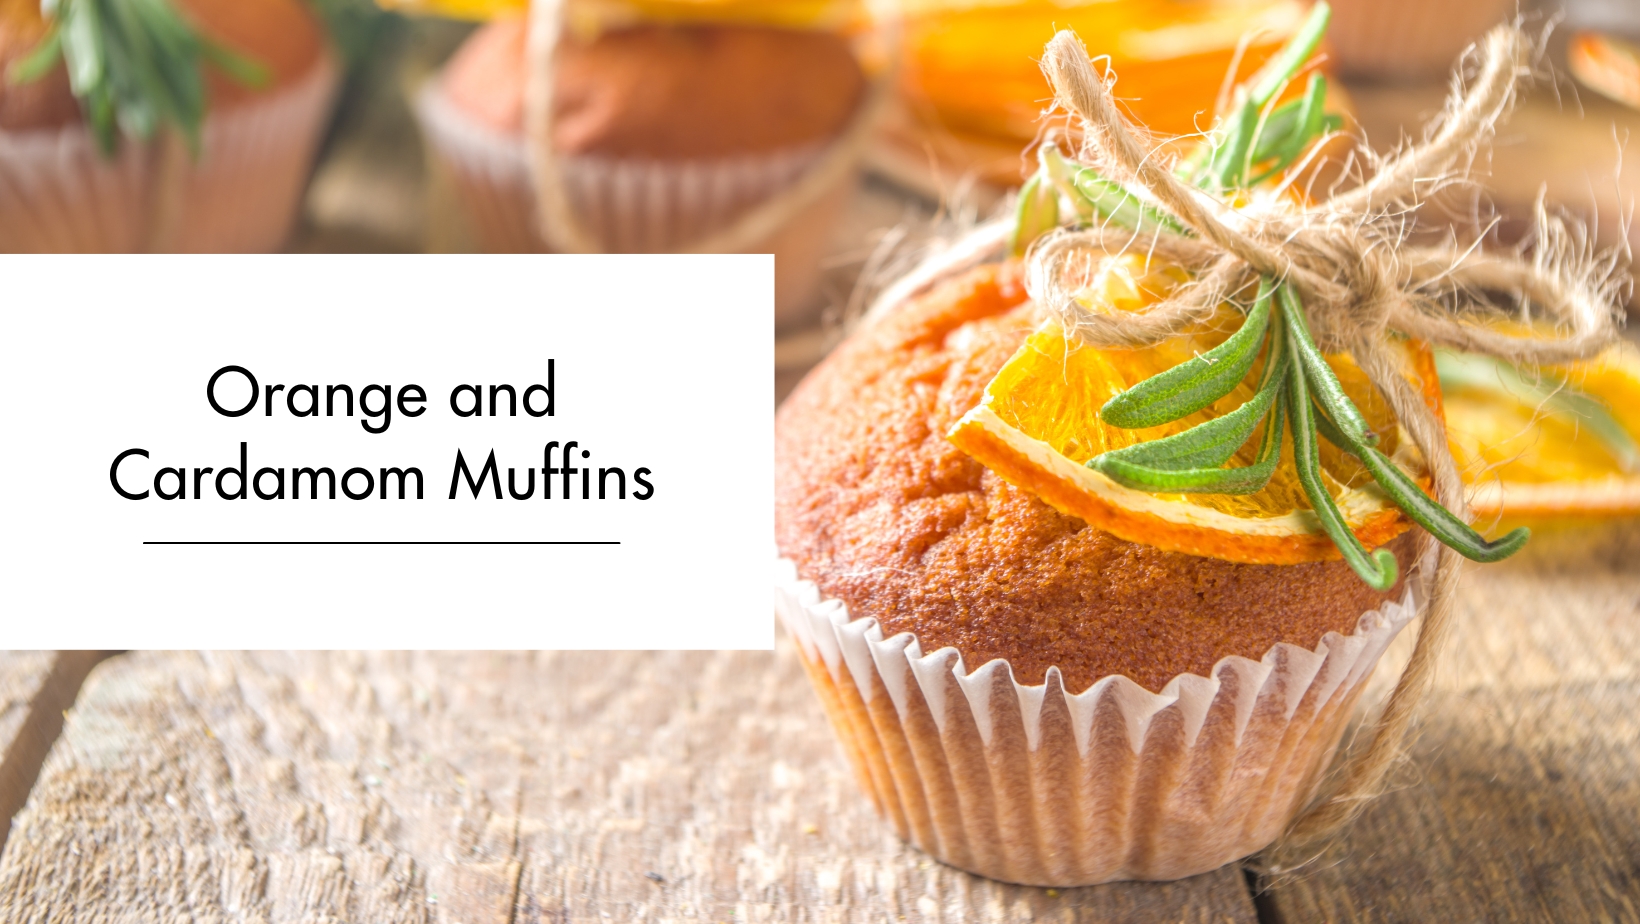 Orange and Cardamom Muffins